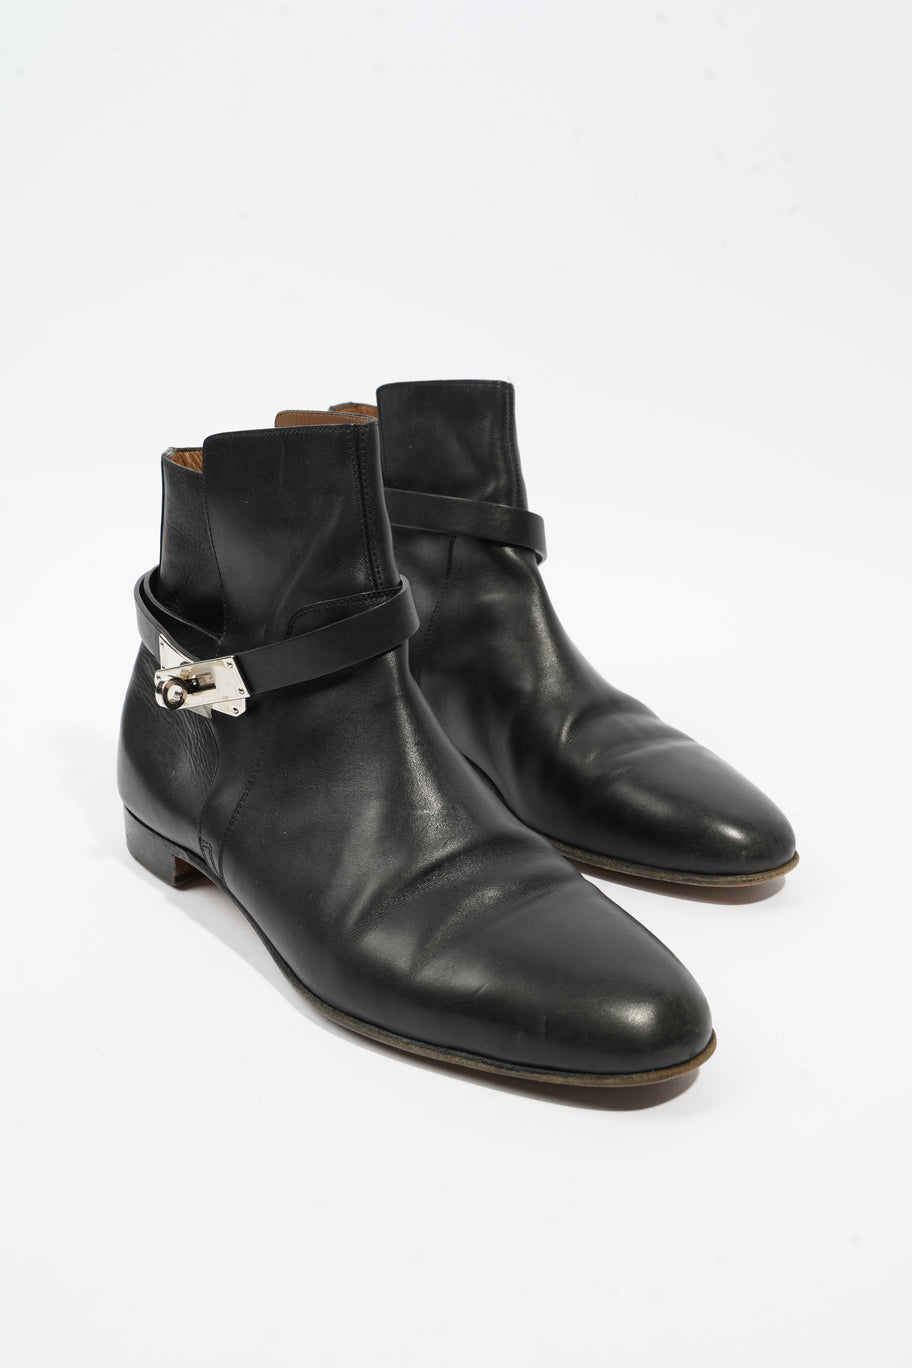 Neo Ankle Boot Black Leather EU 41 UK 8 Image 2